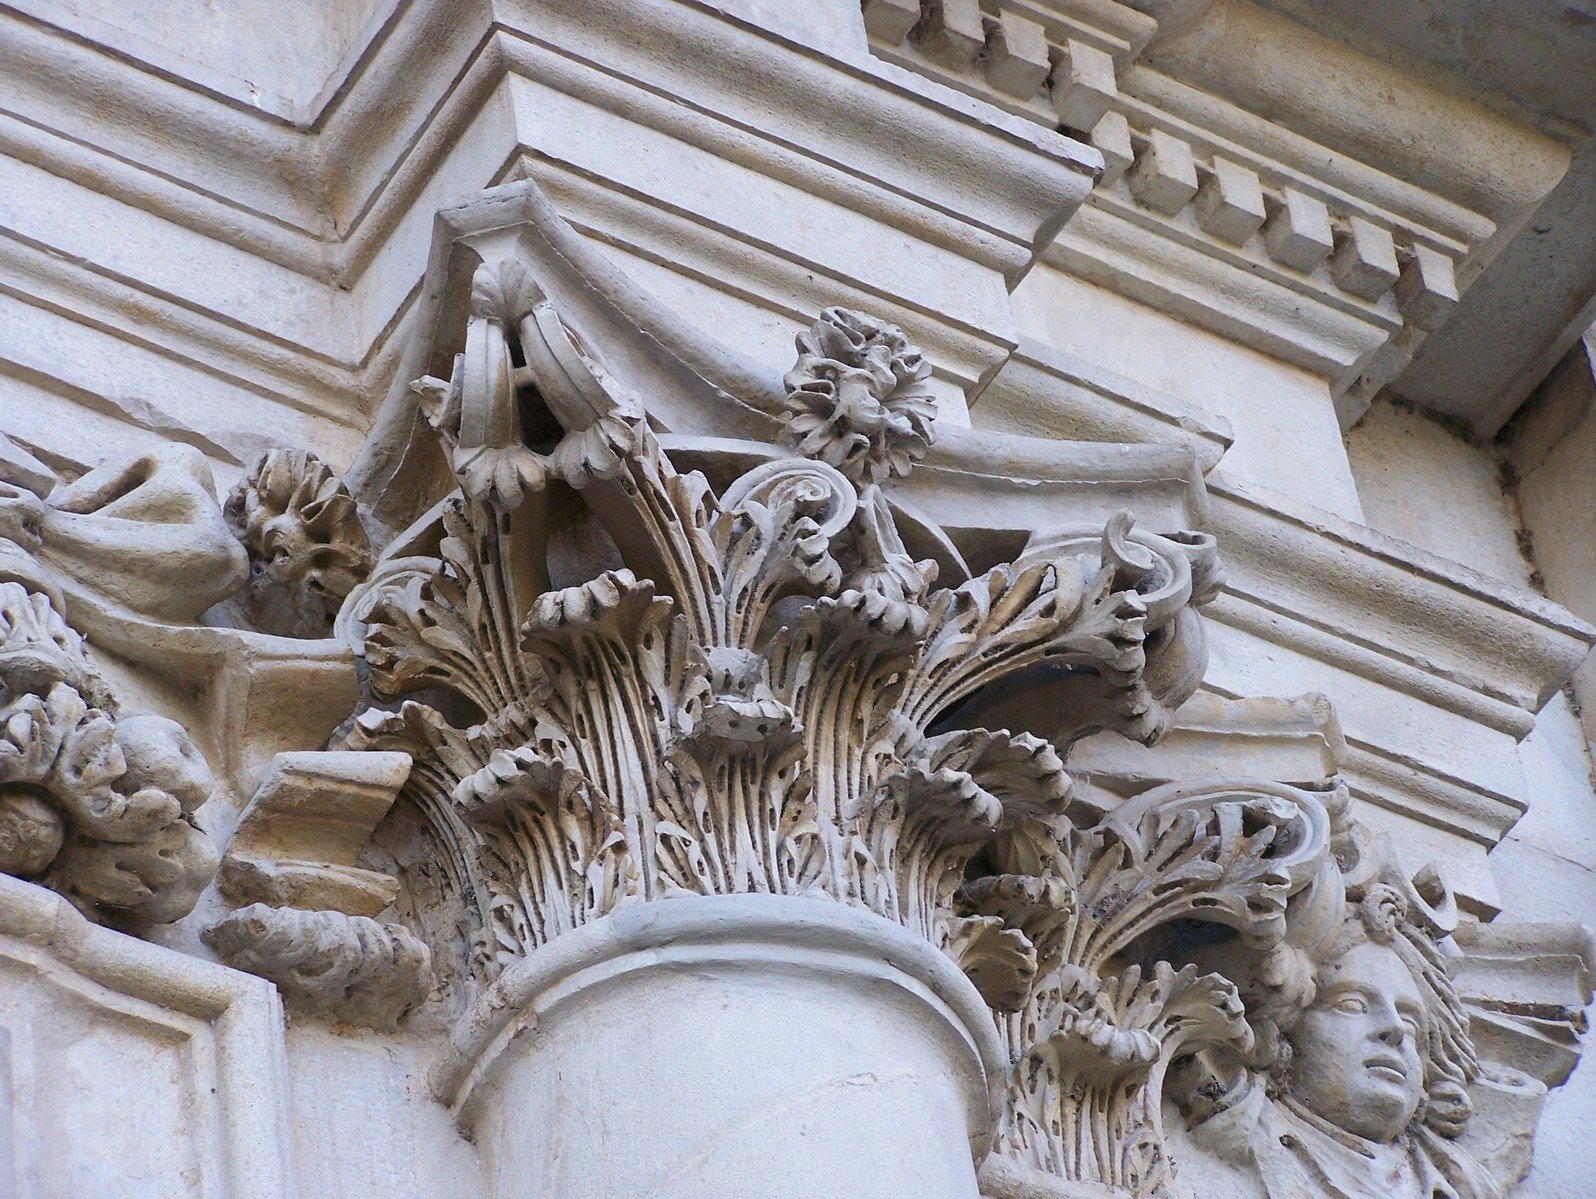 close up image of a gargoyle decoration on a building